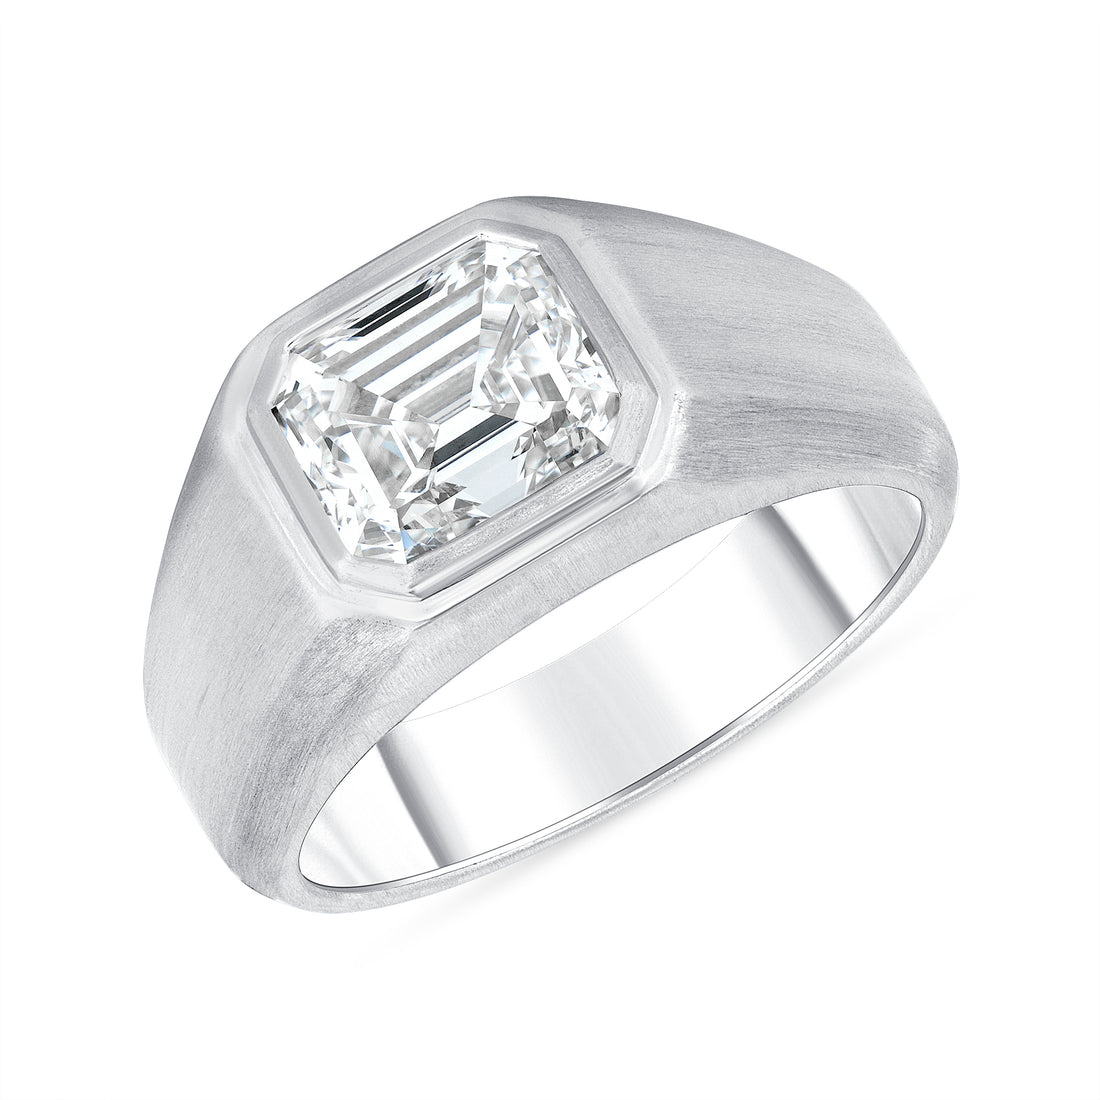 3CT Emerald Cut Diamond Ring